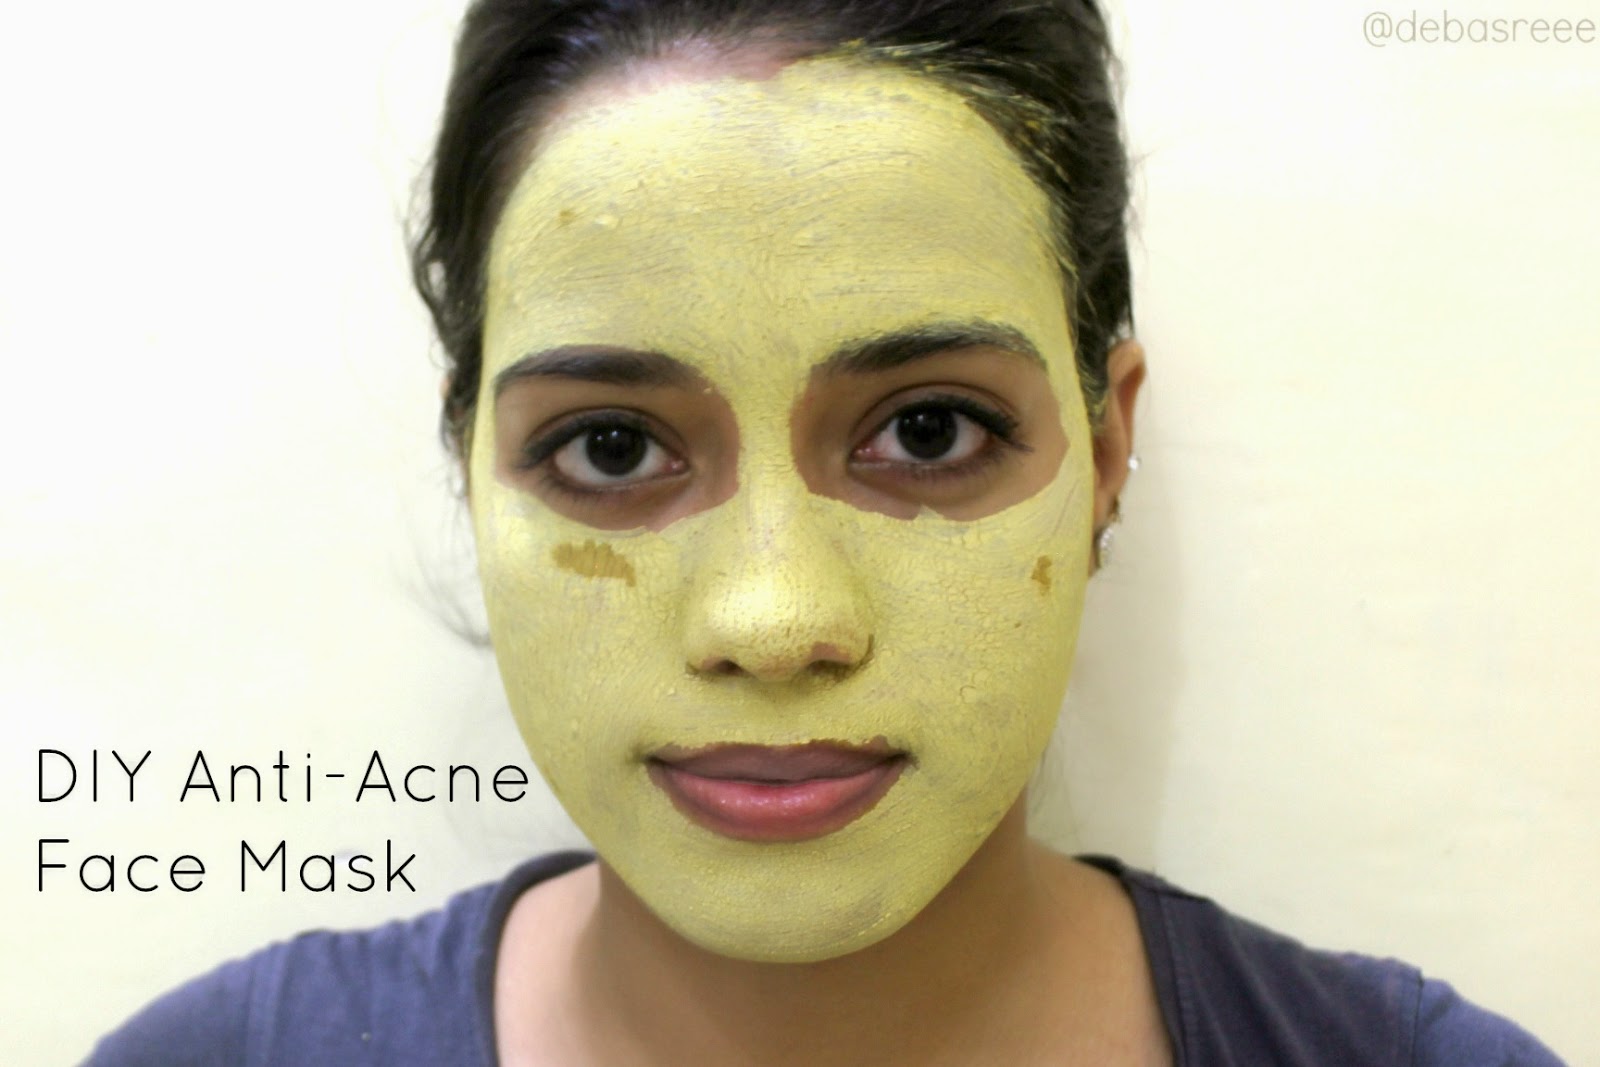 Needs Anti Indian Acne  Face diy mask  acne Mask Fashion  She All   DIY Beauty, face  Easy  turmeric